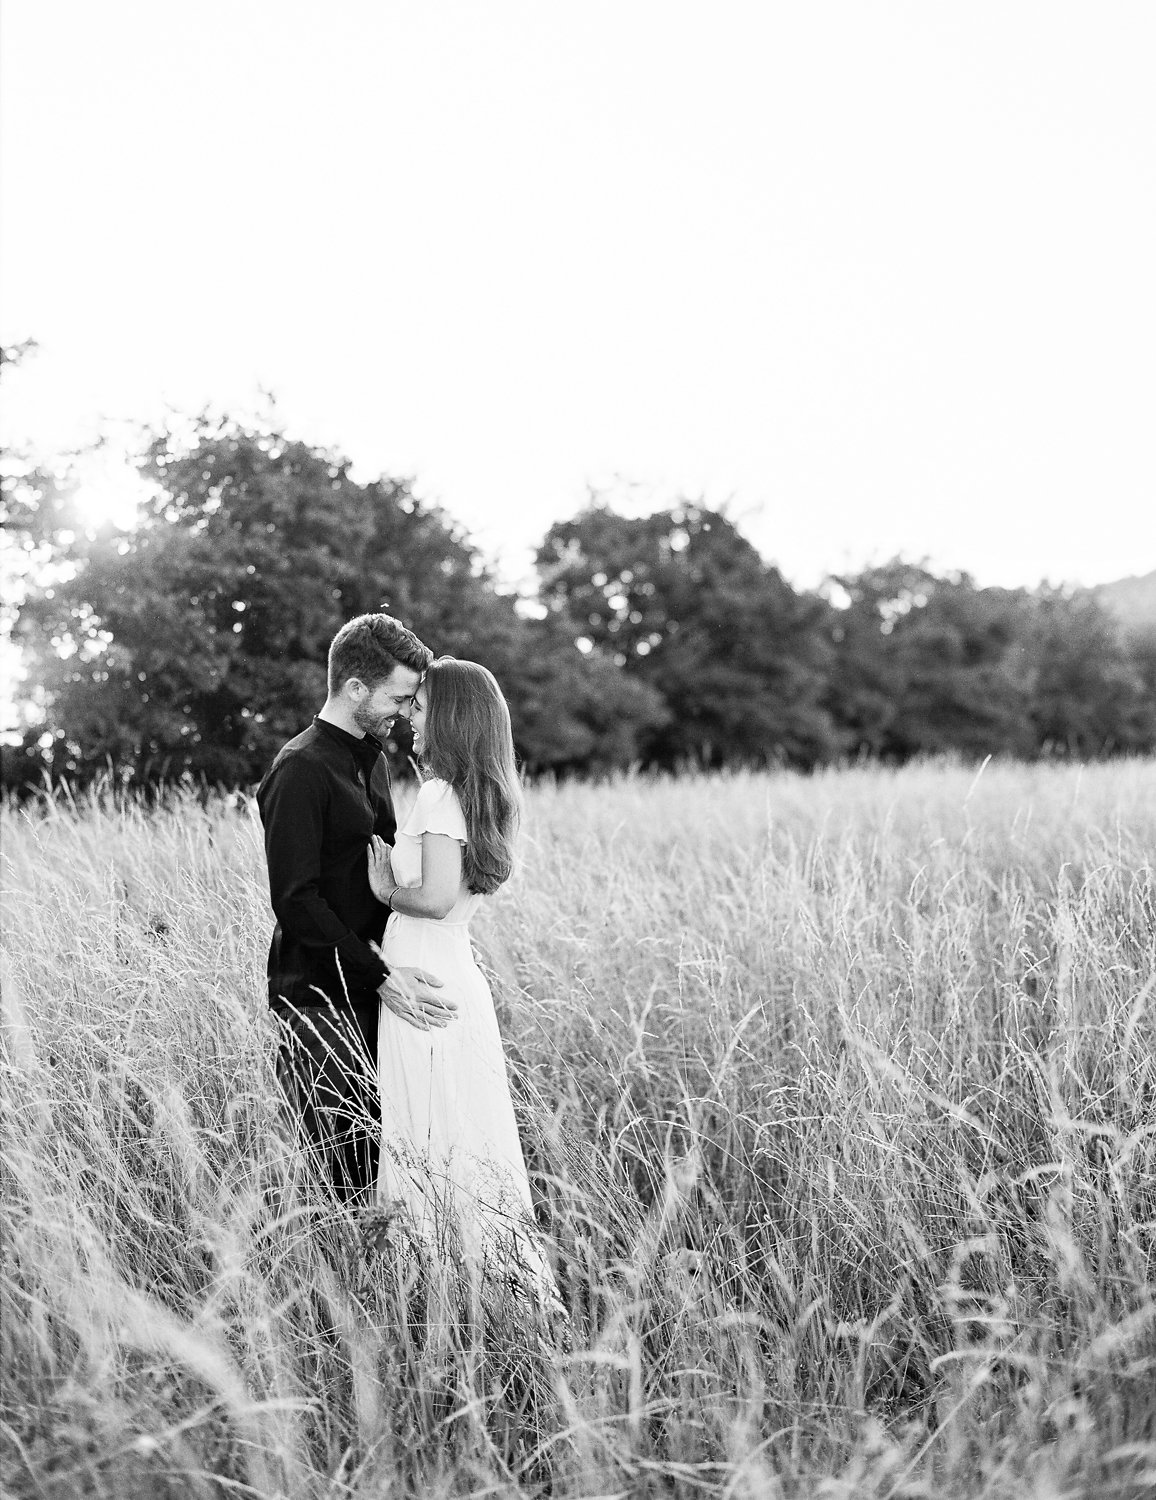 ninaxpatrick: Our Wedding Photographer - Melanie Nedelko | you rock my life